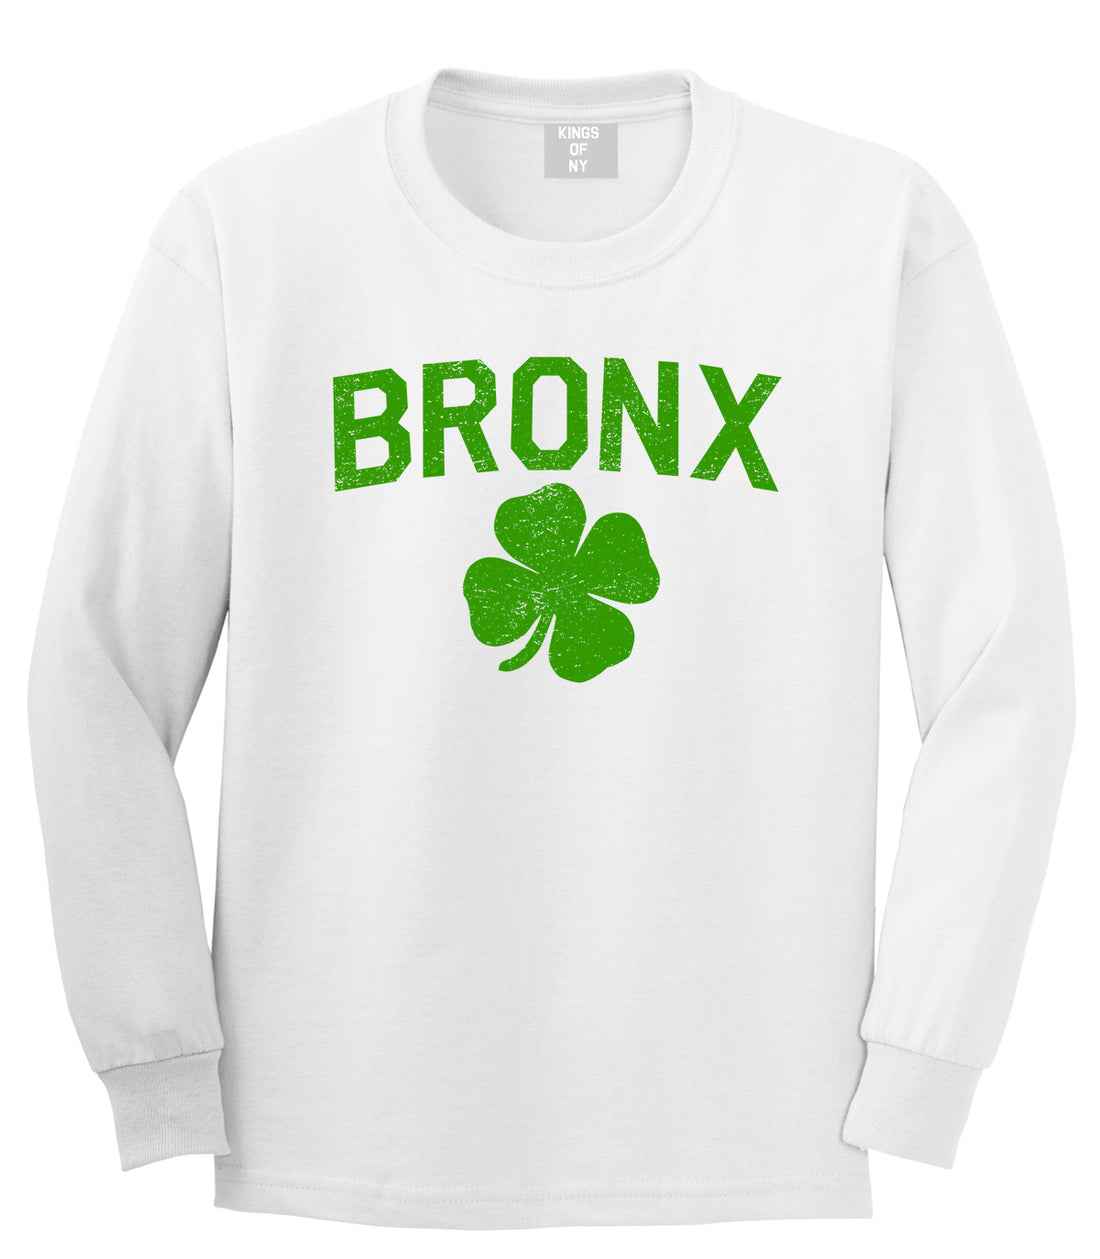 The Bronx Irish St Patricks Day Mens Long Sleeve T-Shirt White